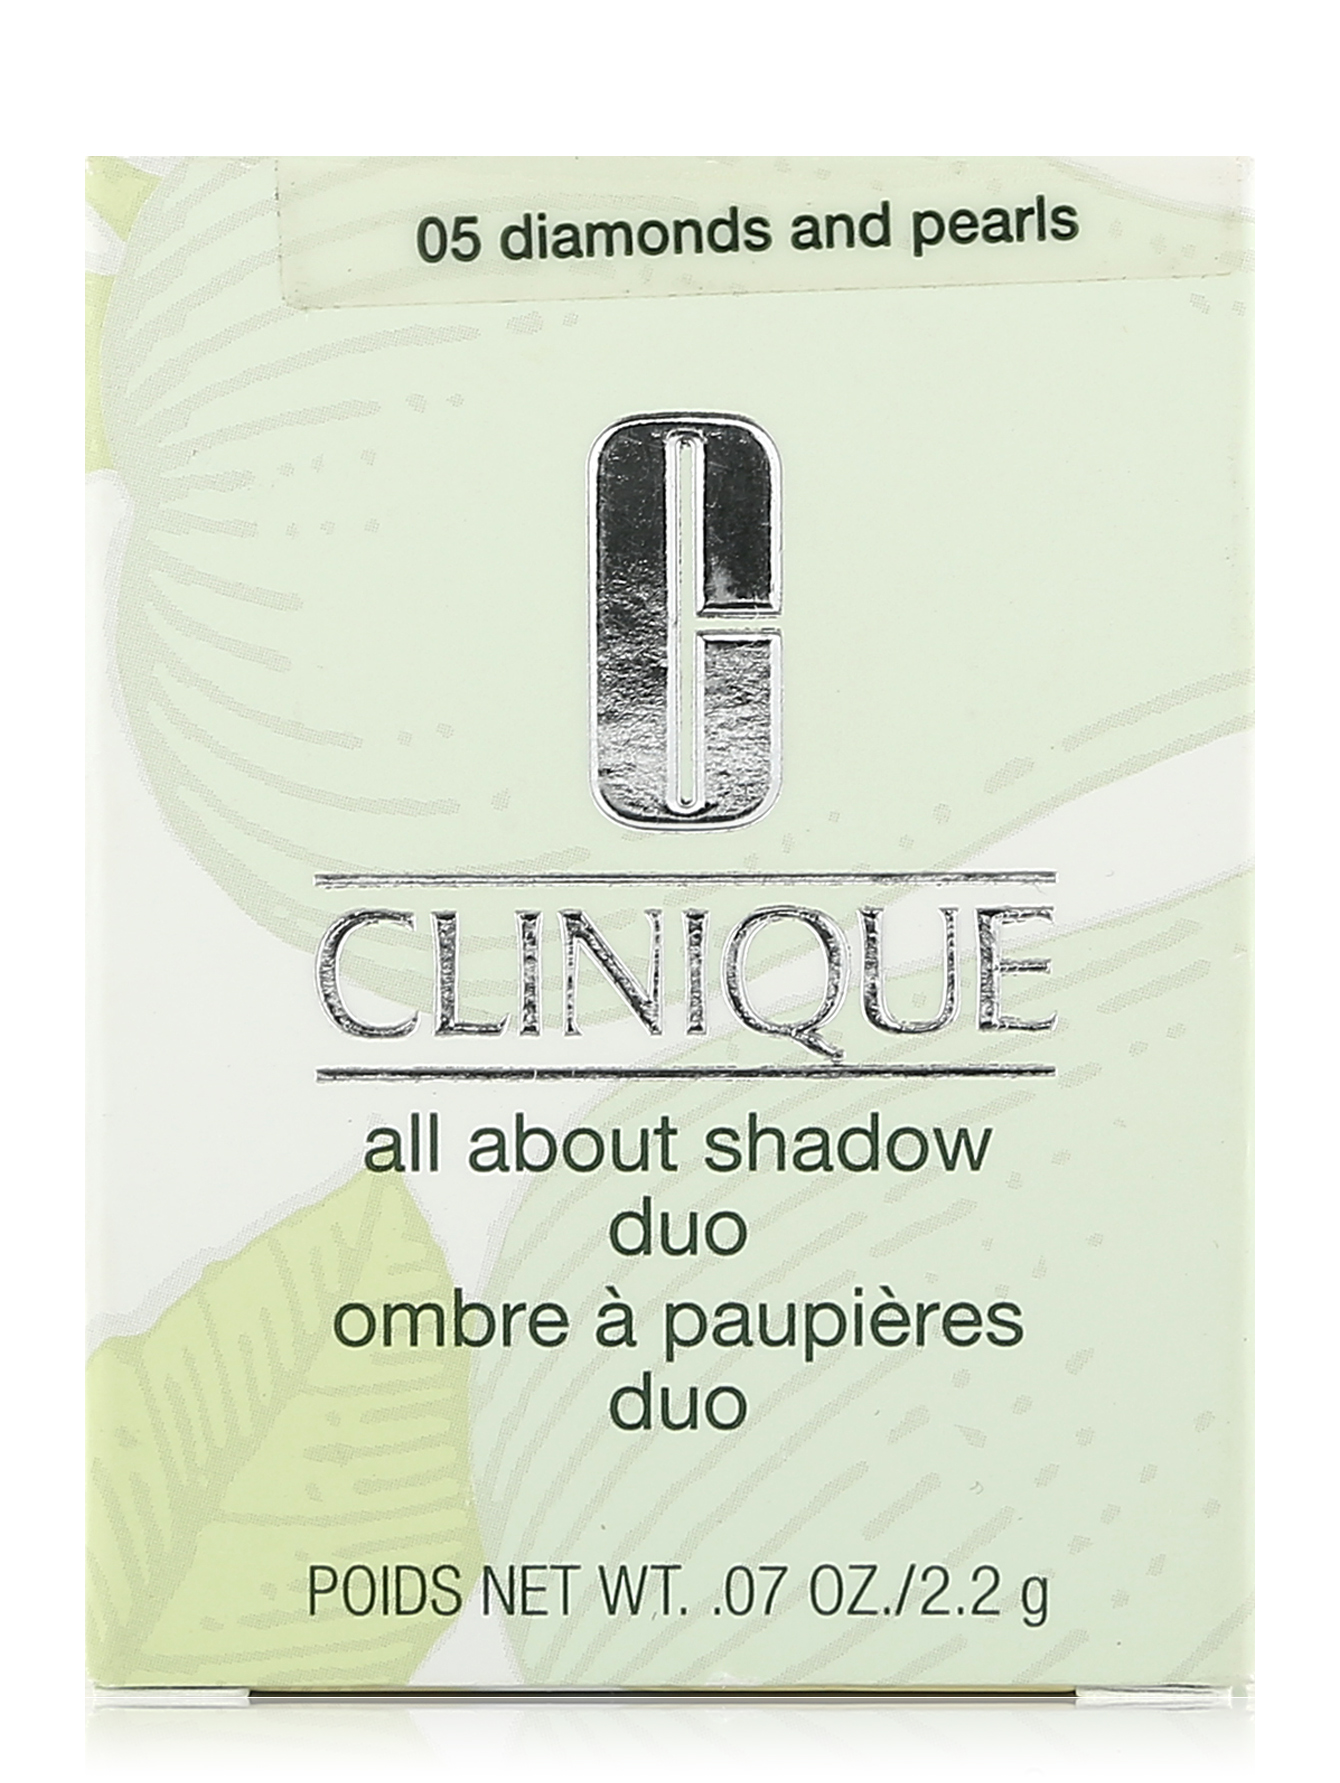  Двойные тени для век - Diamond And Pearls, Eye Shadow Duo - Обтравка1